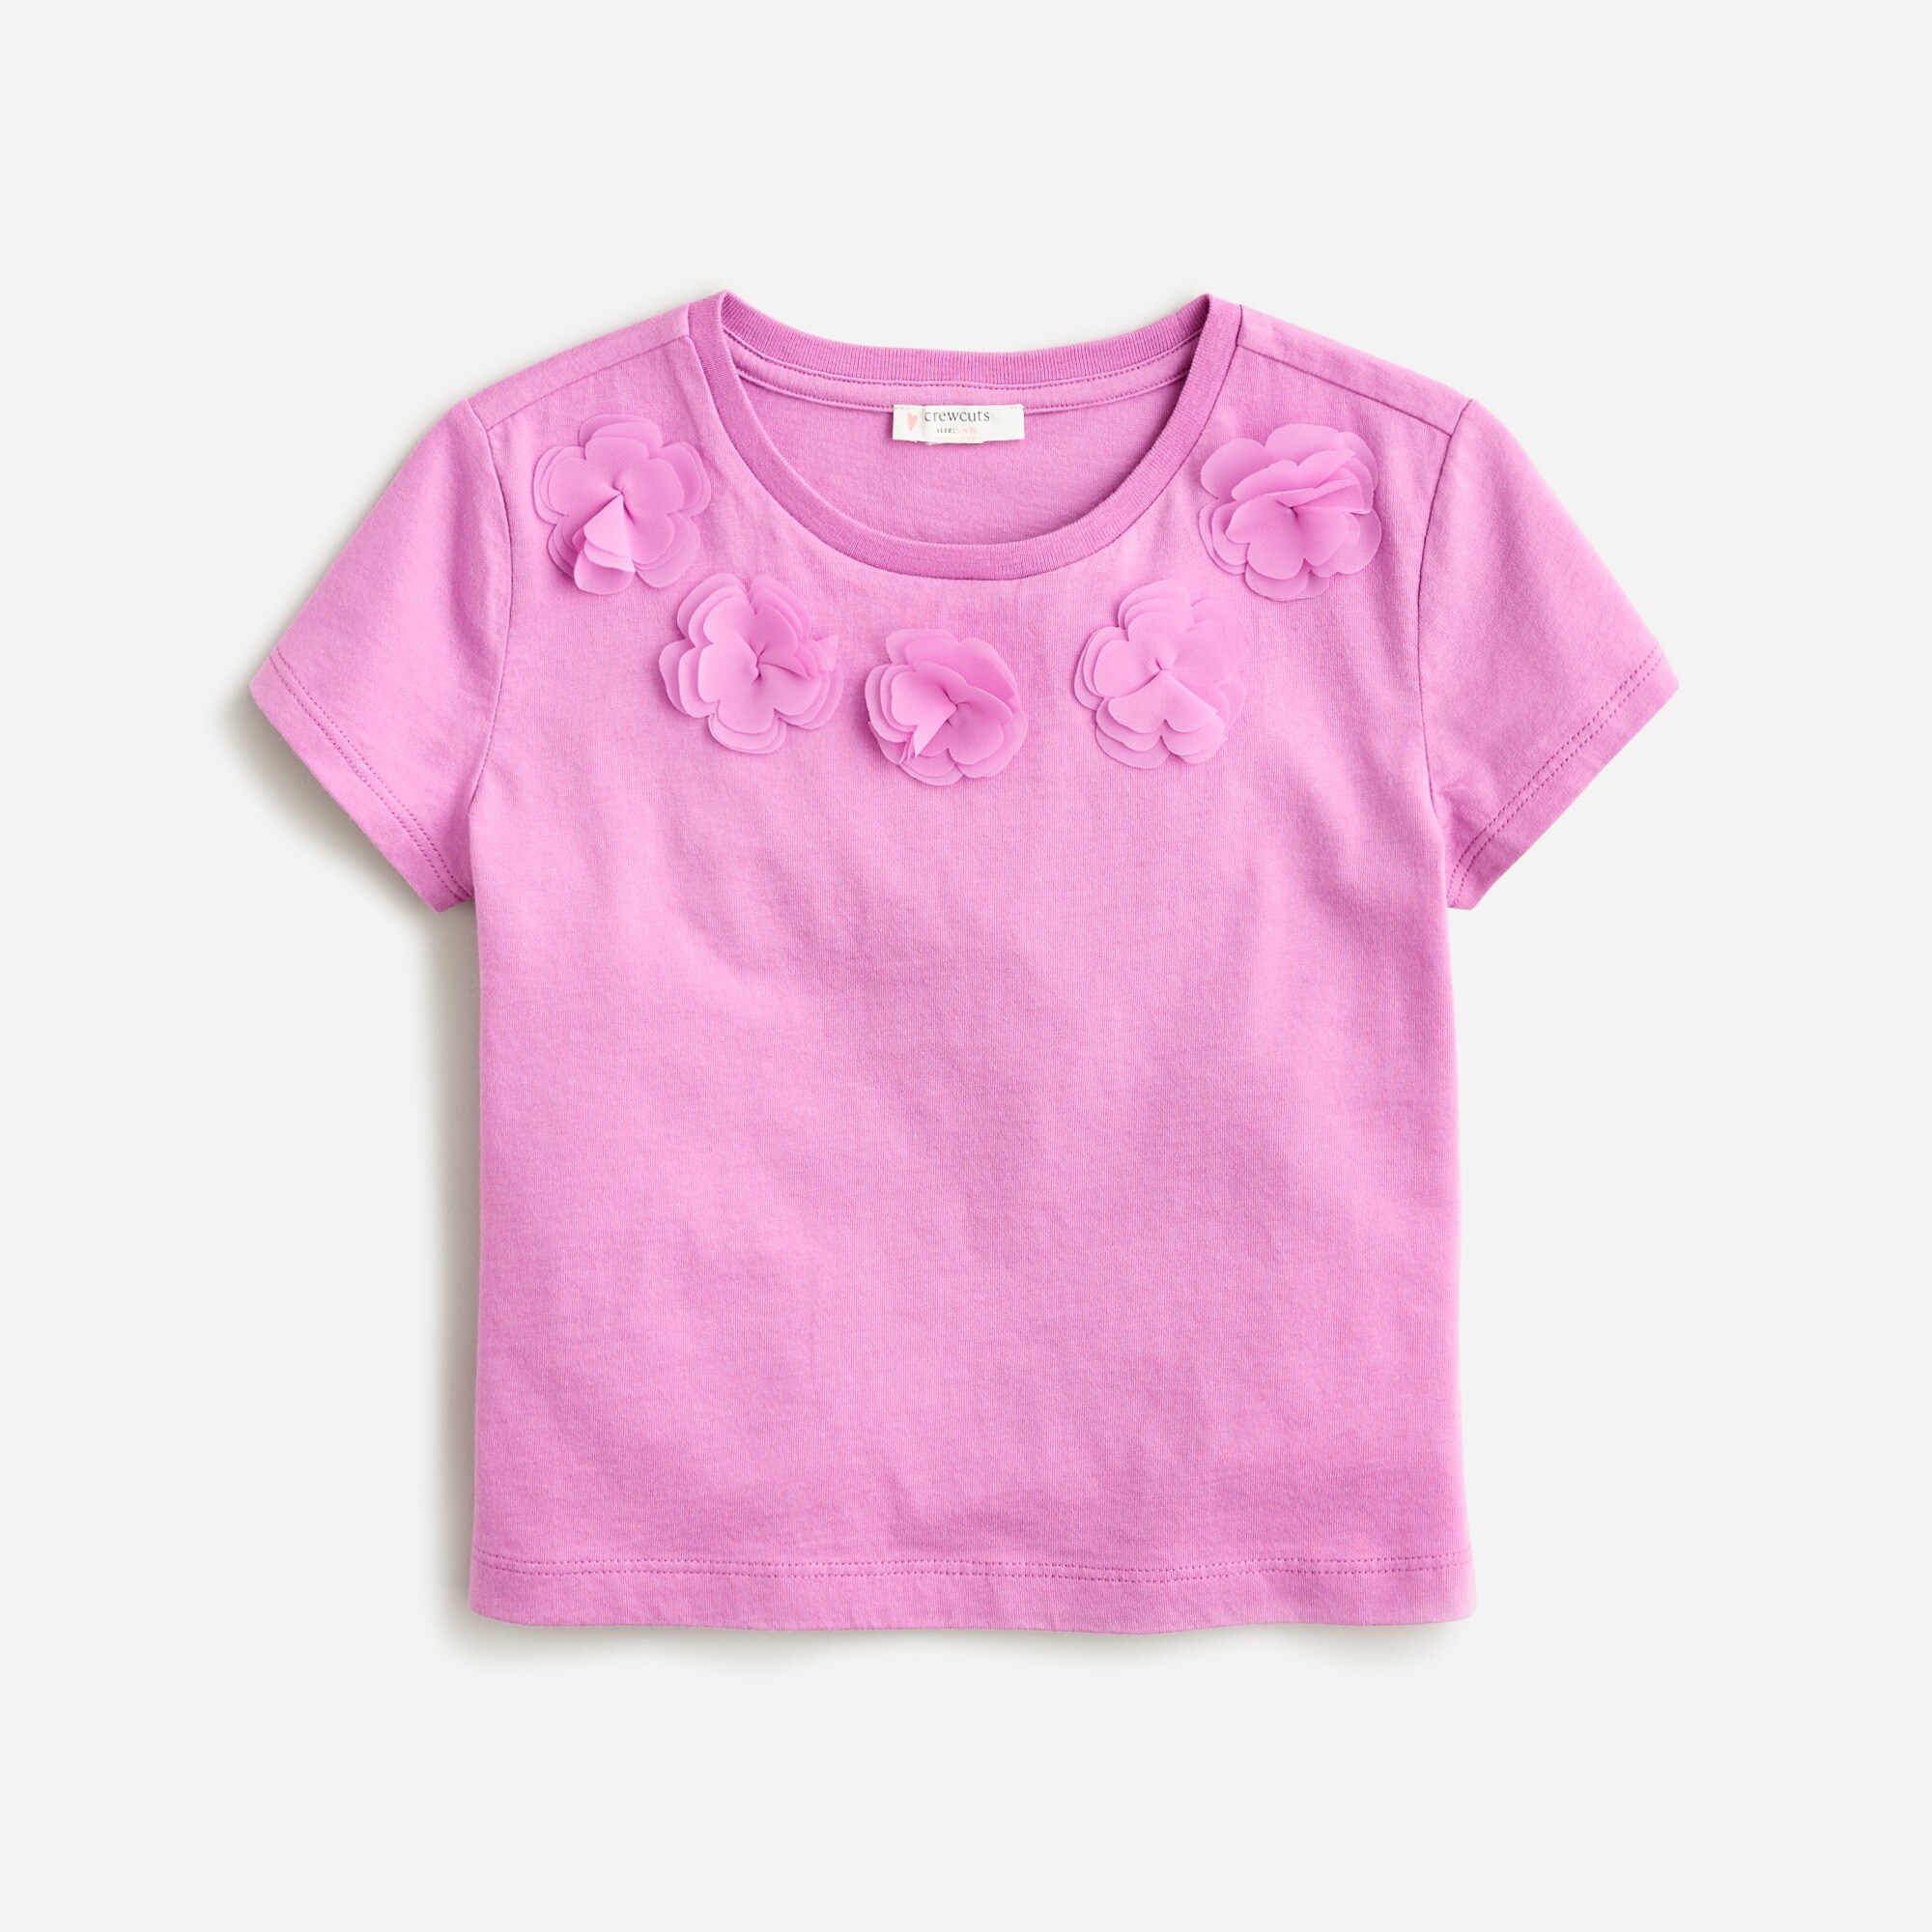  Girls' shrunken floral appliqu&eacute; graphic T-shirt